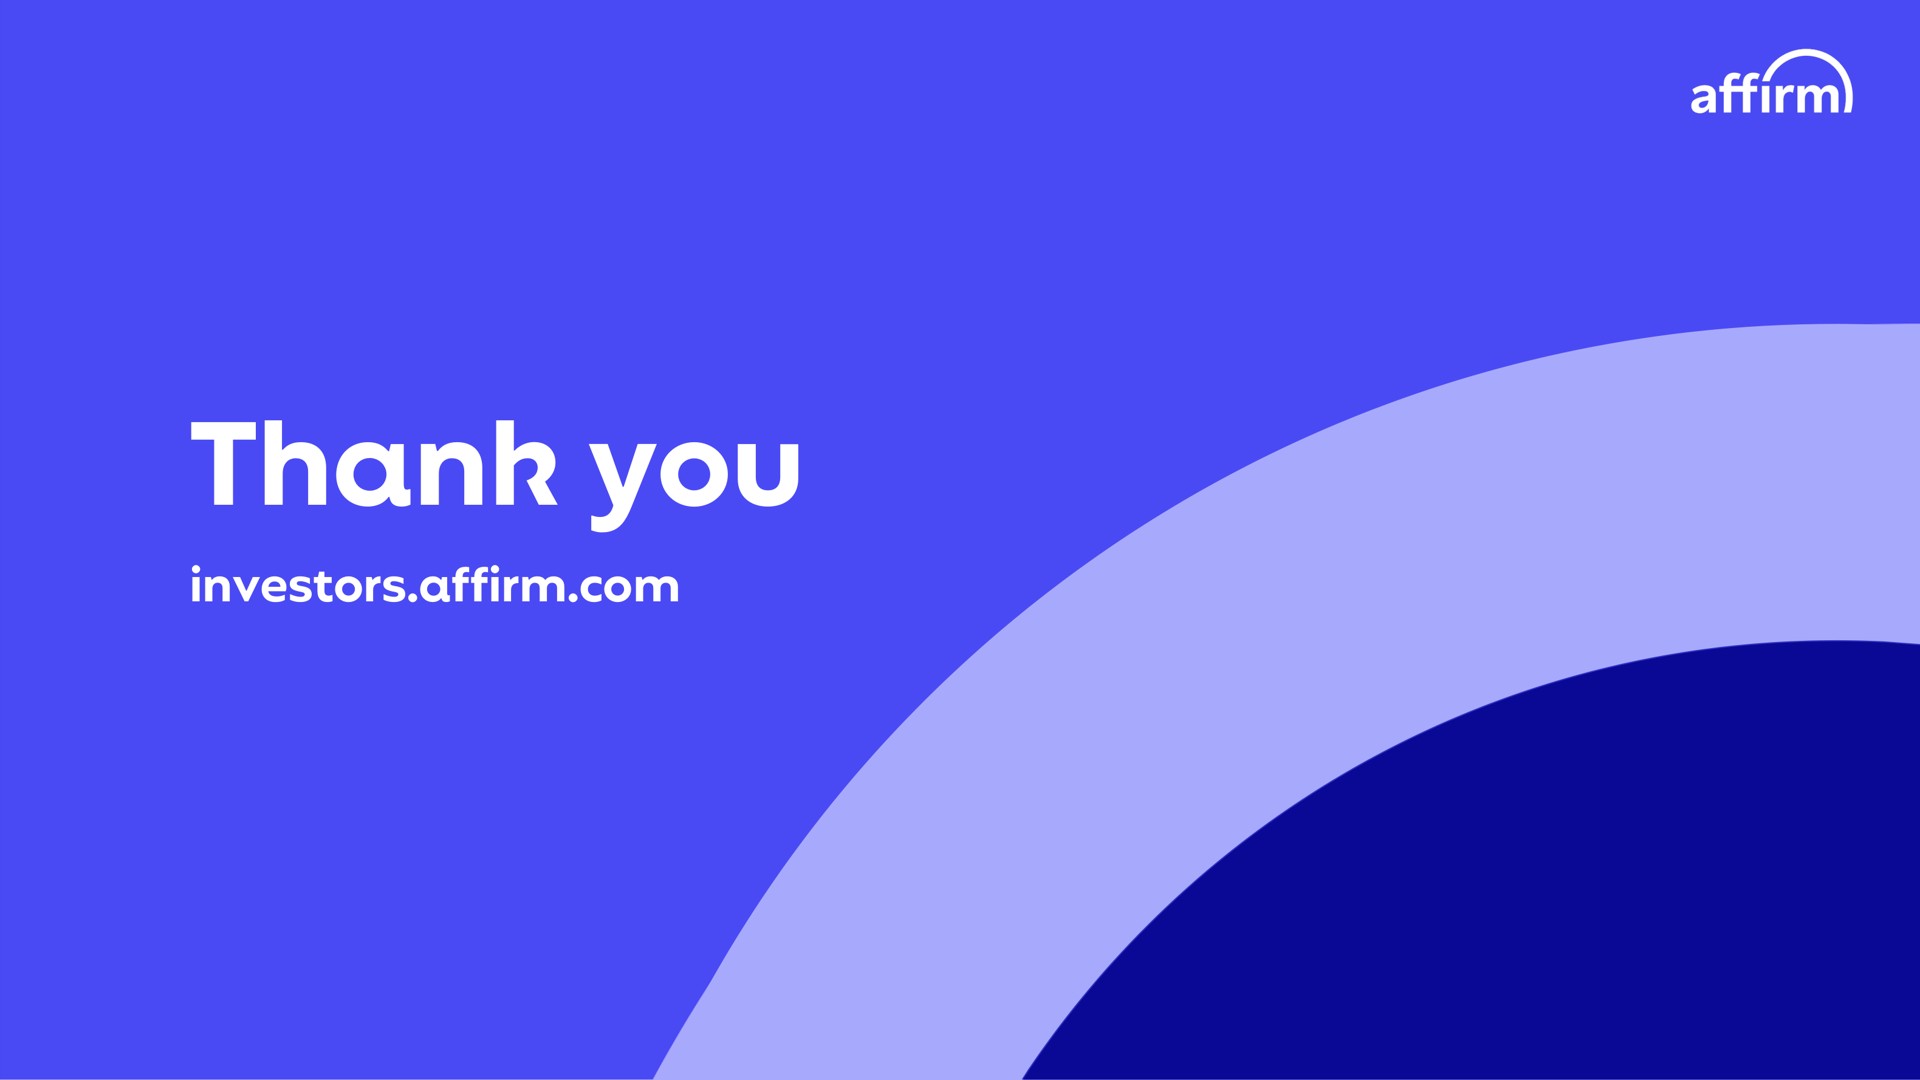 thank you investors affirm | Affirm